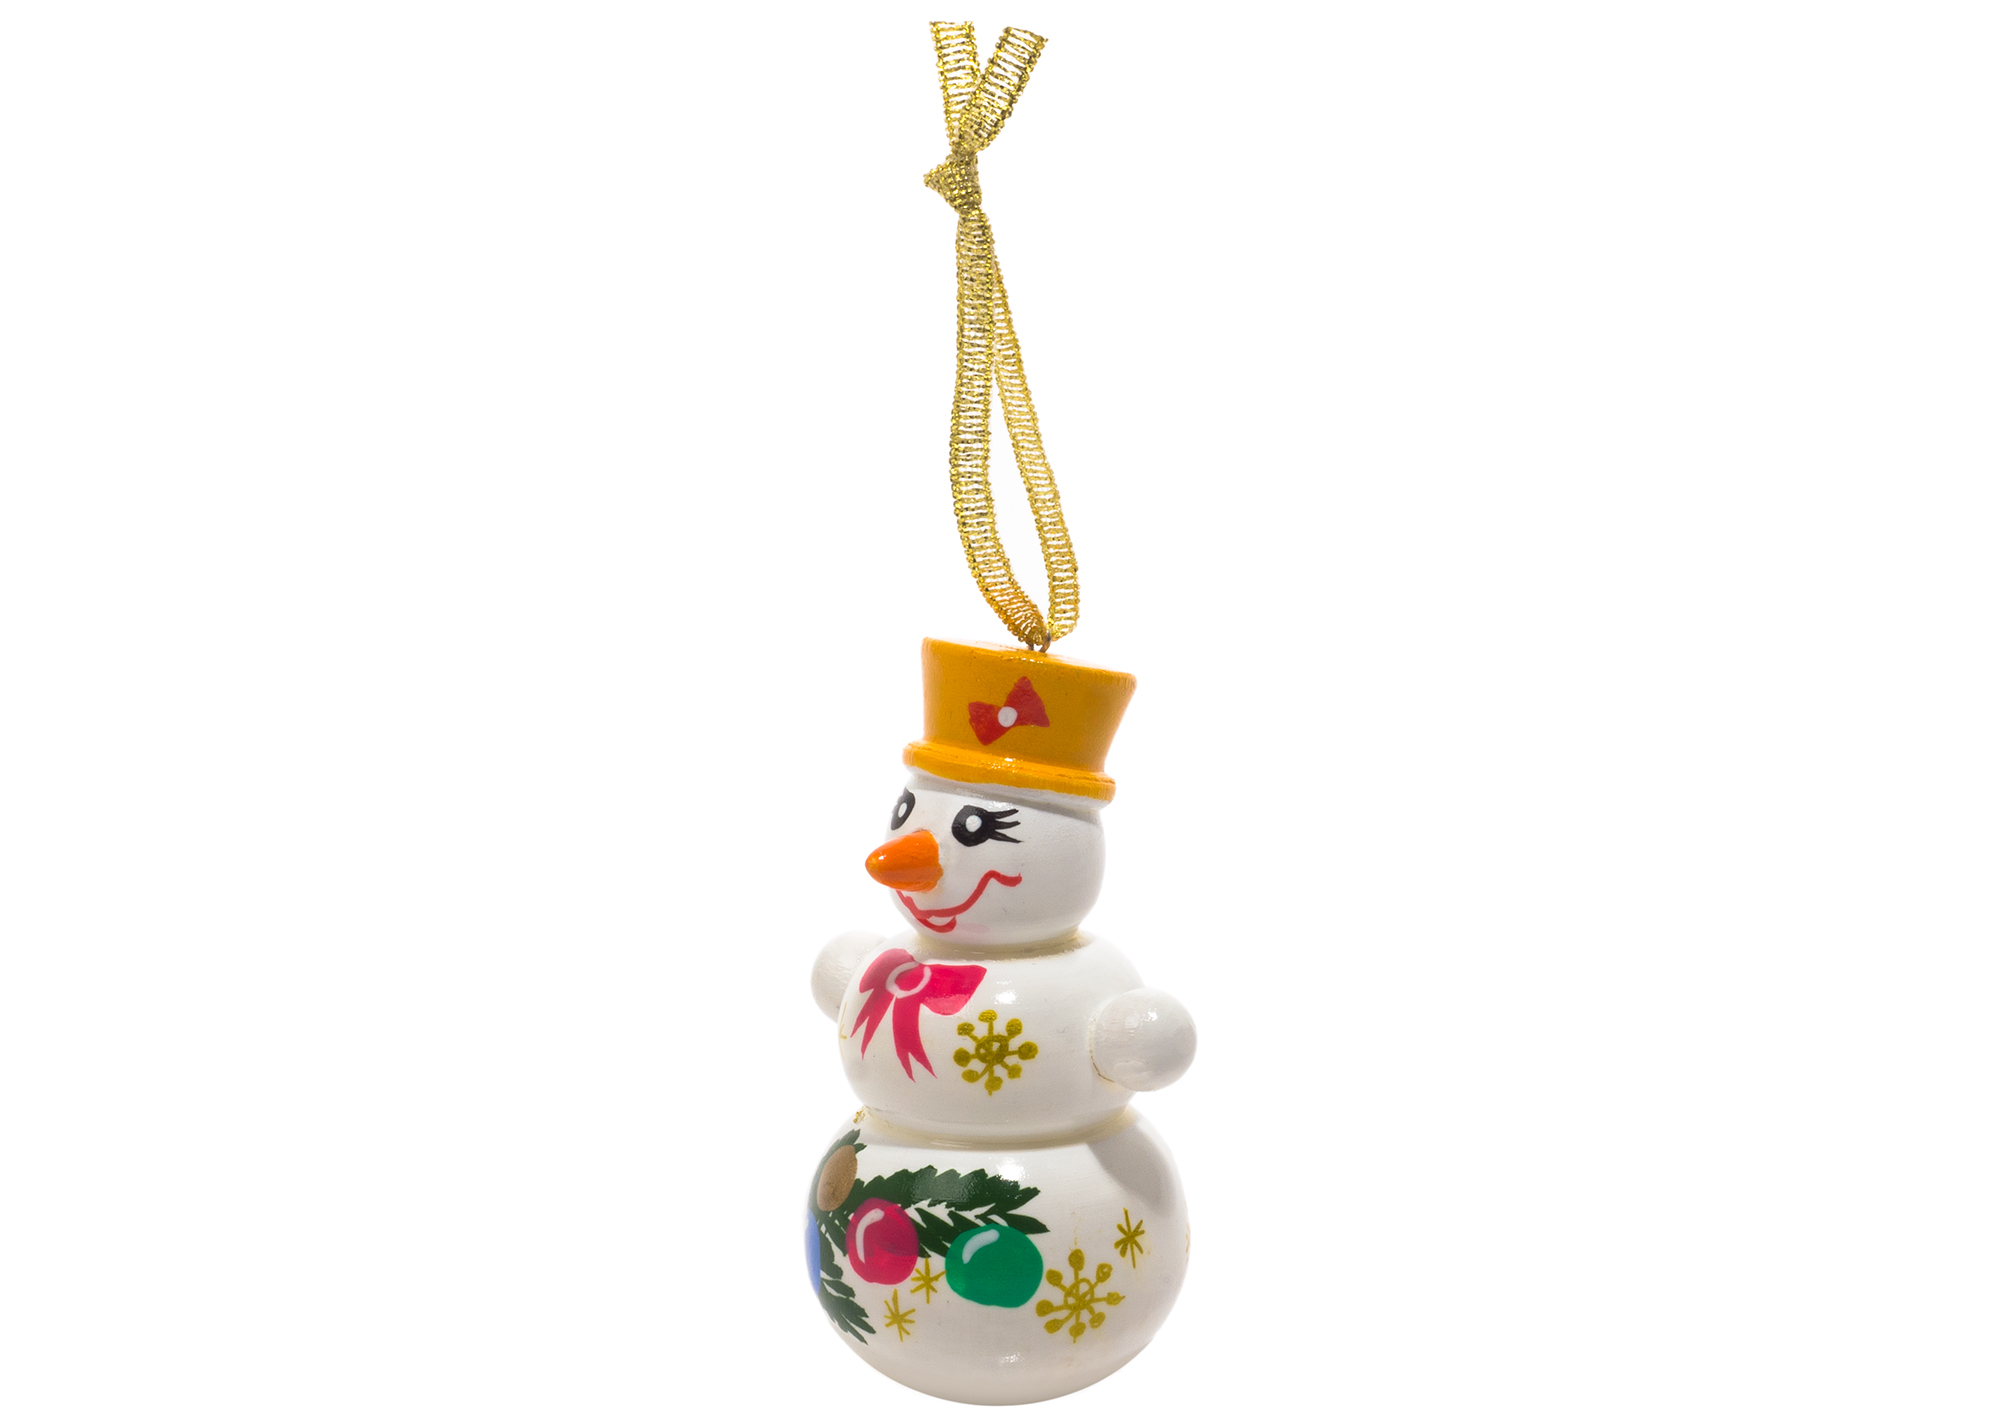 Buy Snow Man with Hat Ornament 3" at GoldenCockerel.com